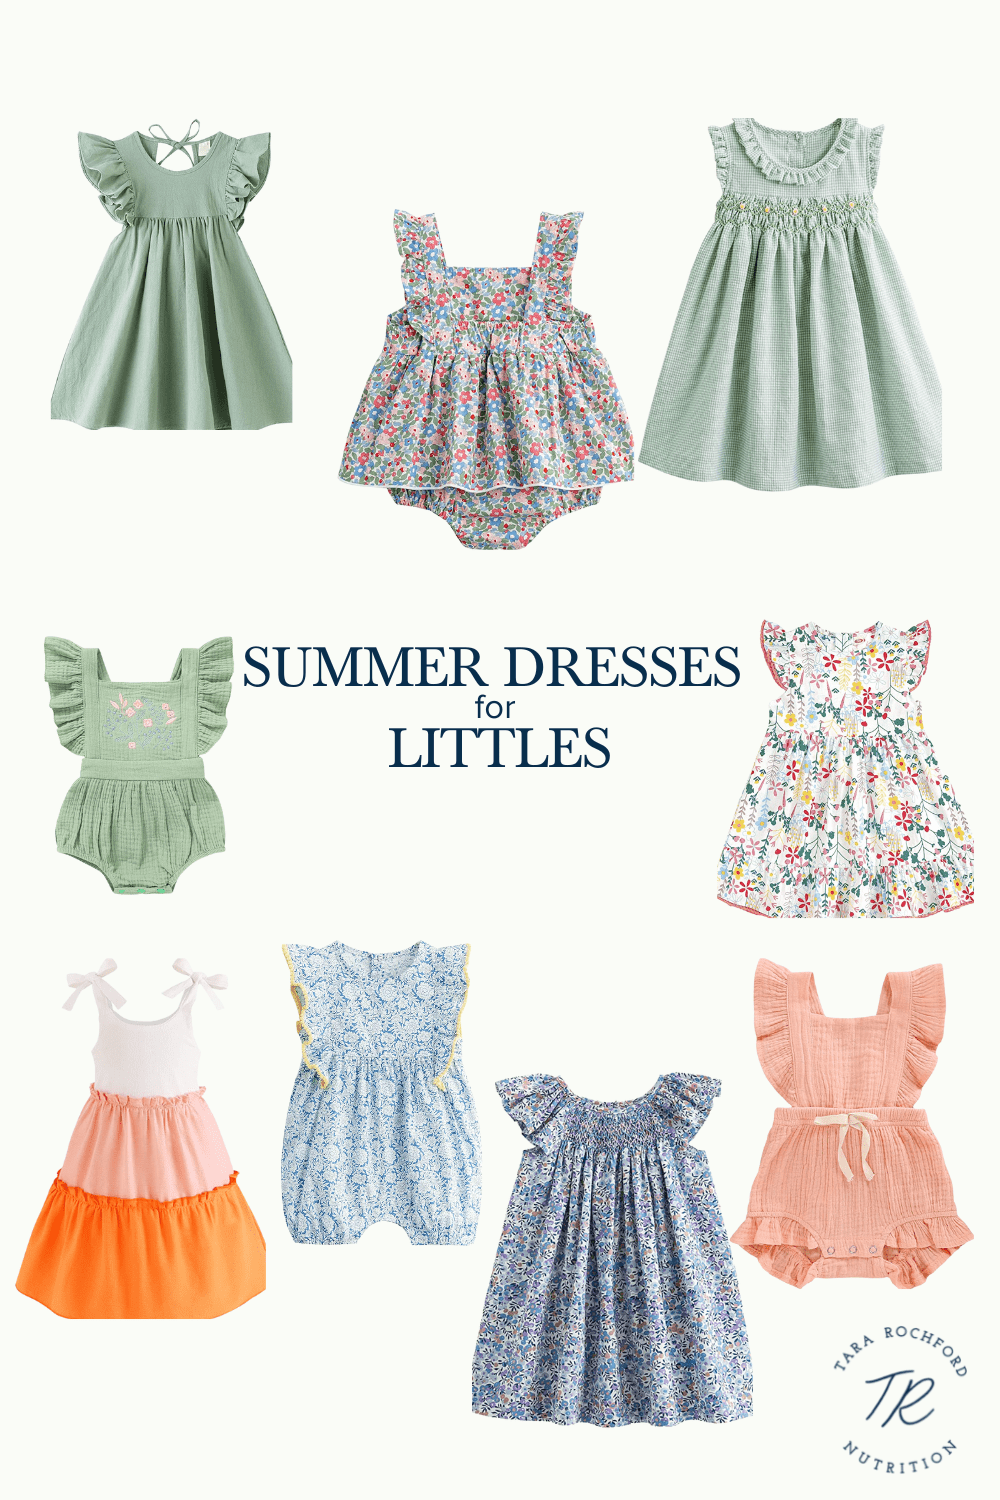 Summer Dresses for Littles #toddlerfashion #babyfashion